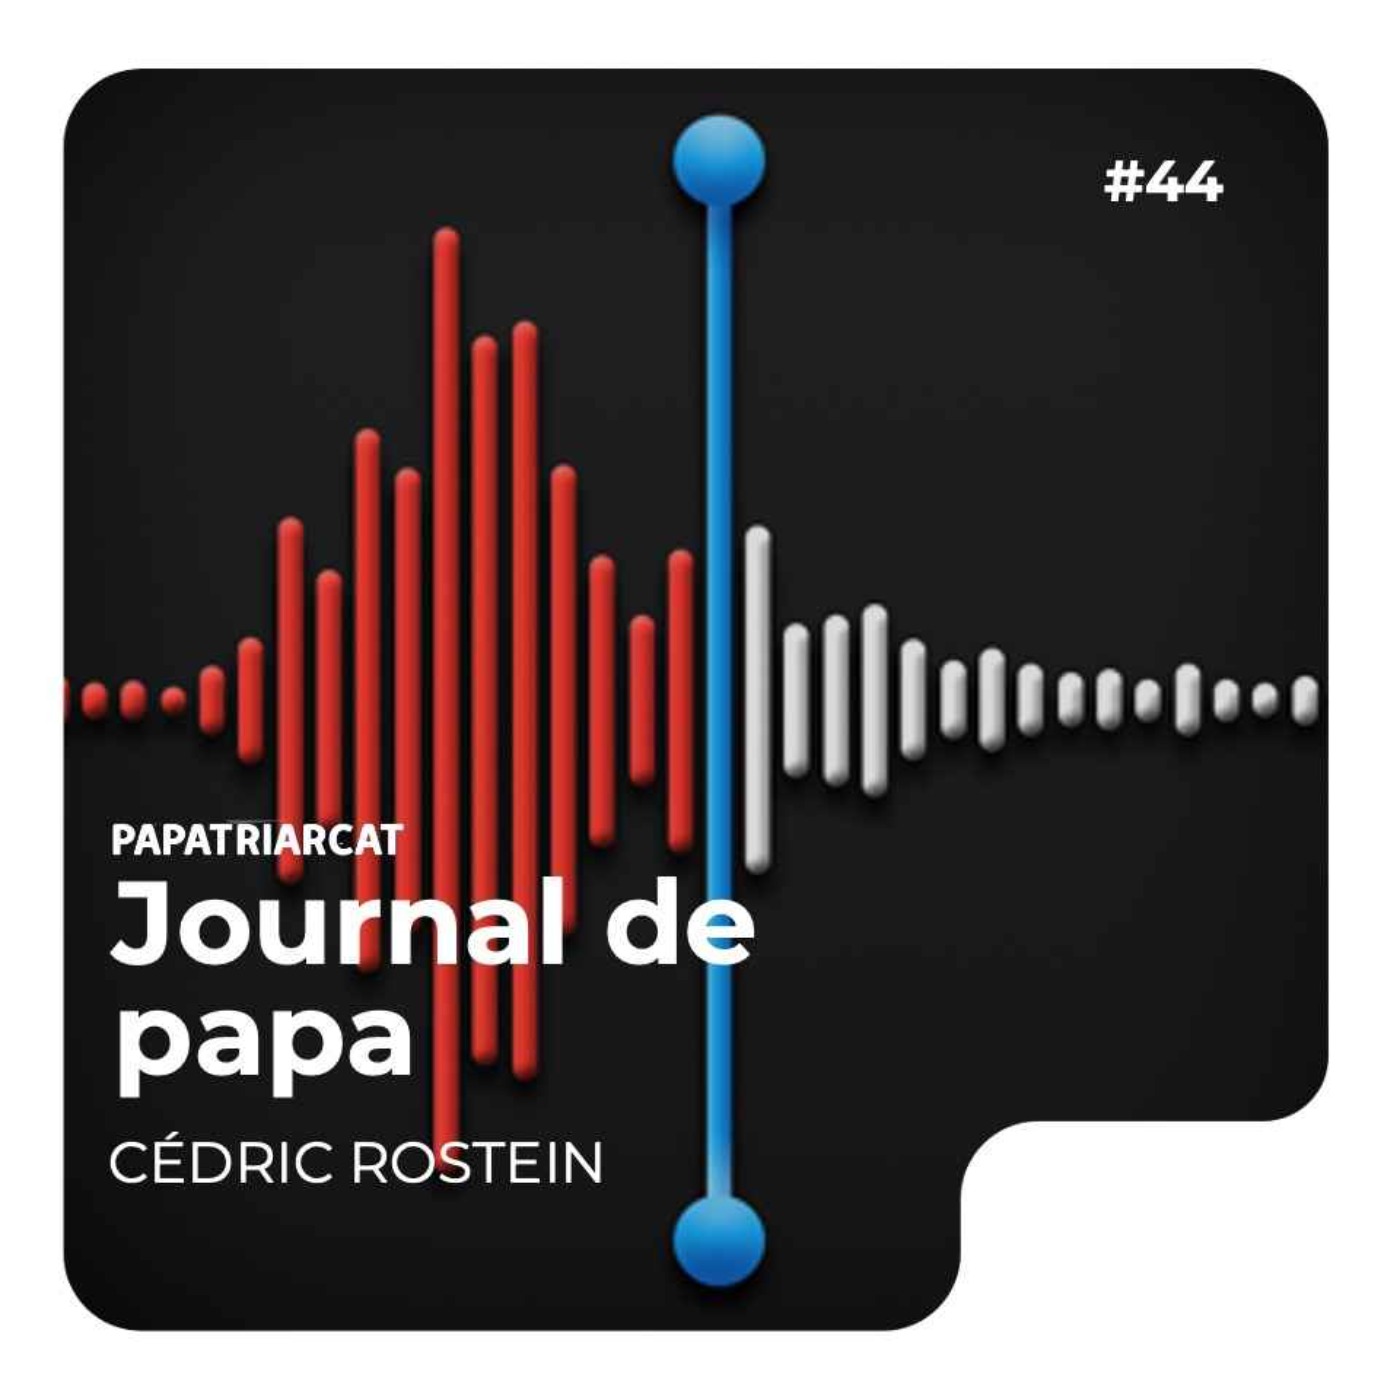 Journal de papa #44